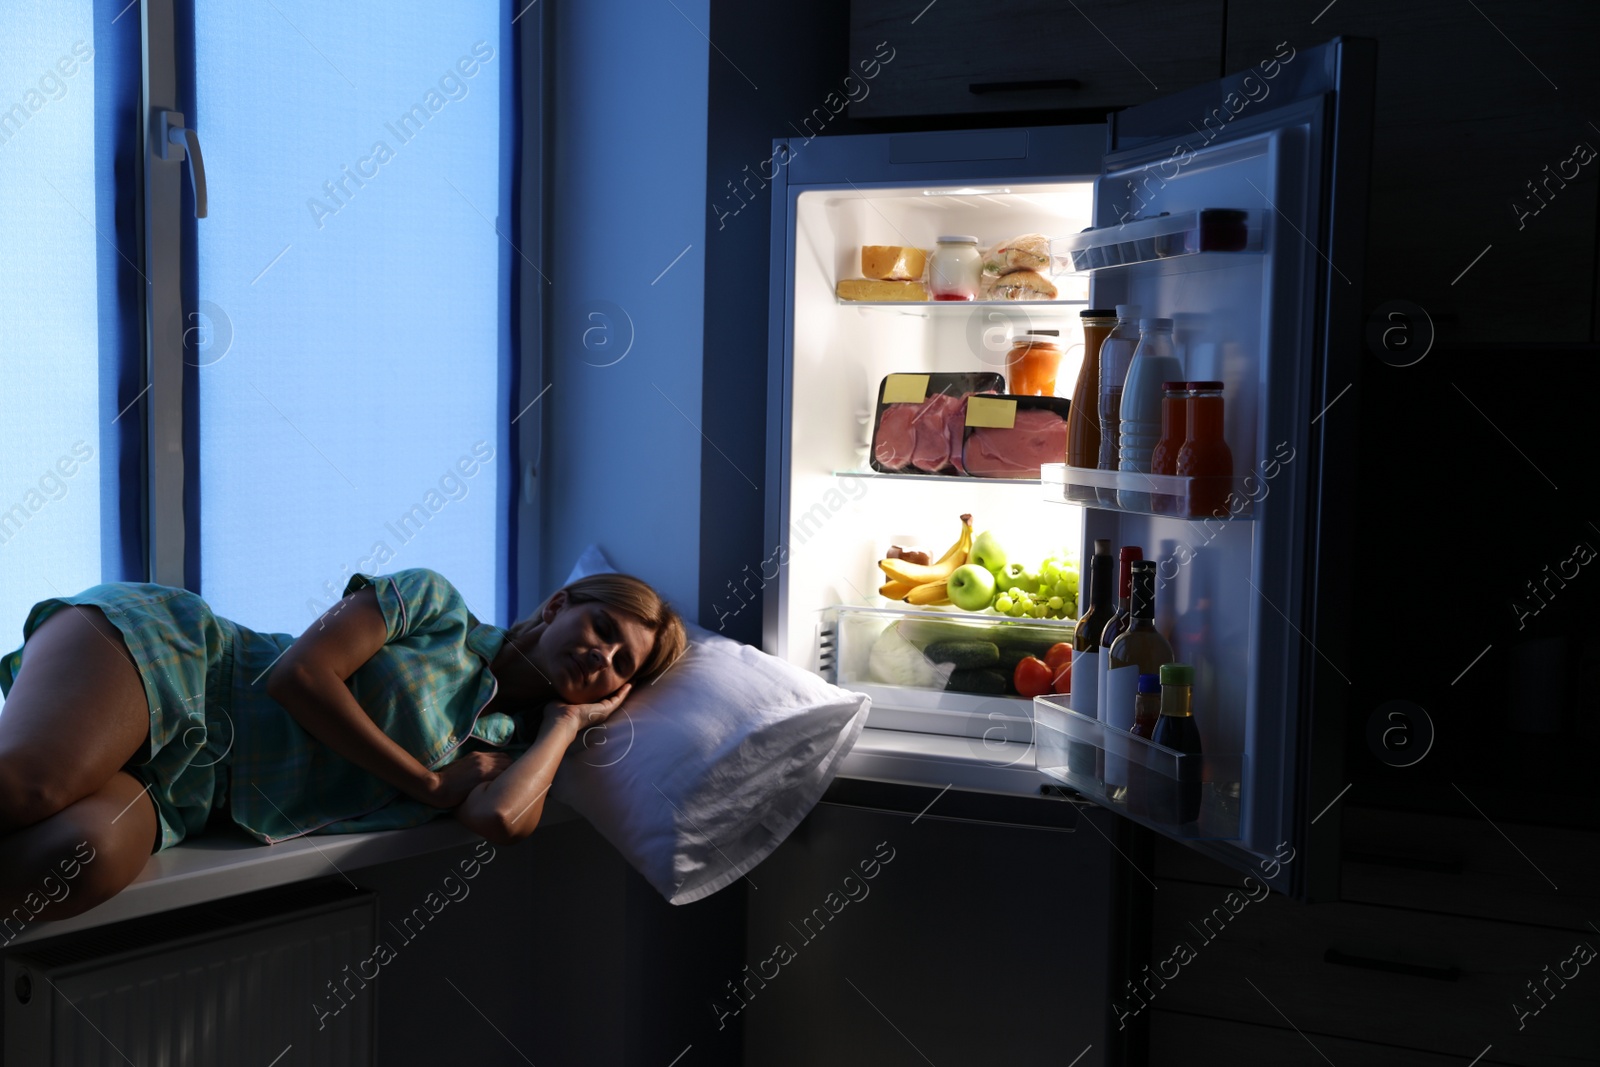 Photo of Woman sleeping on window sill near open refrigerator in kitchen at night